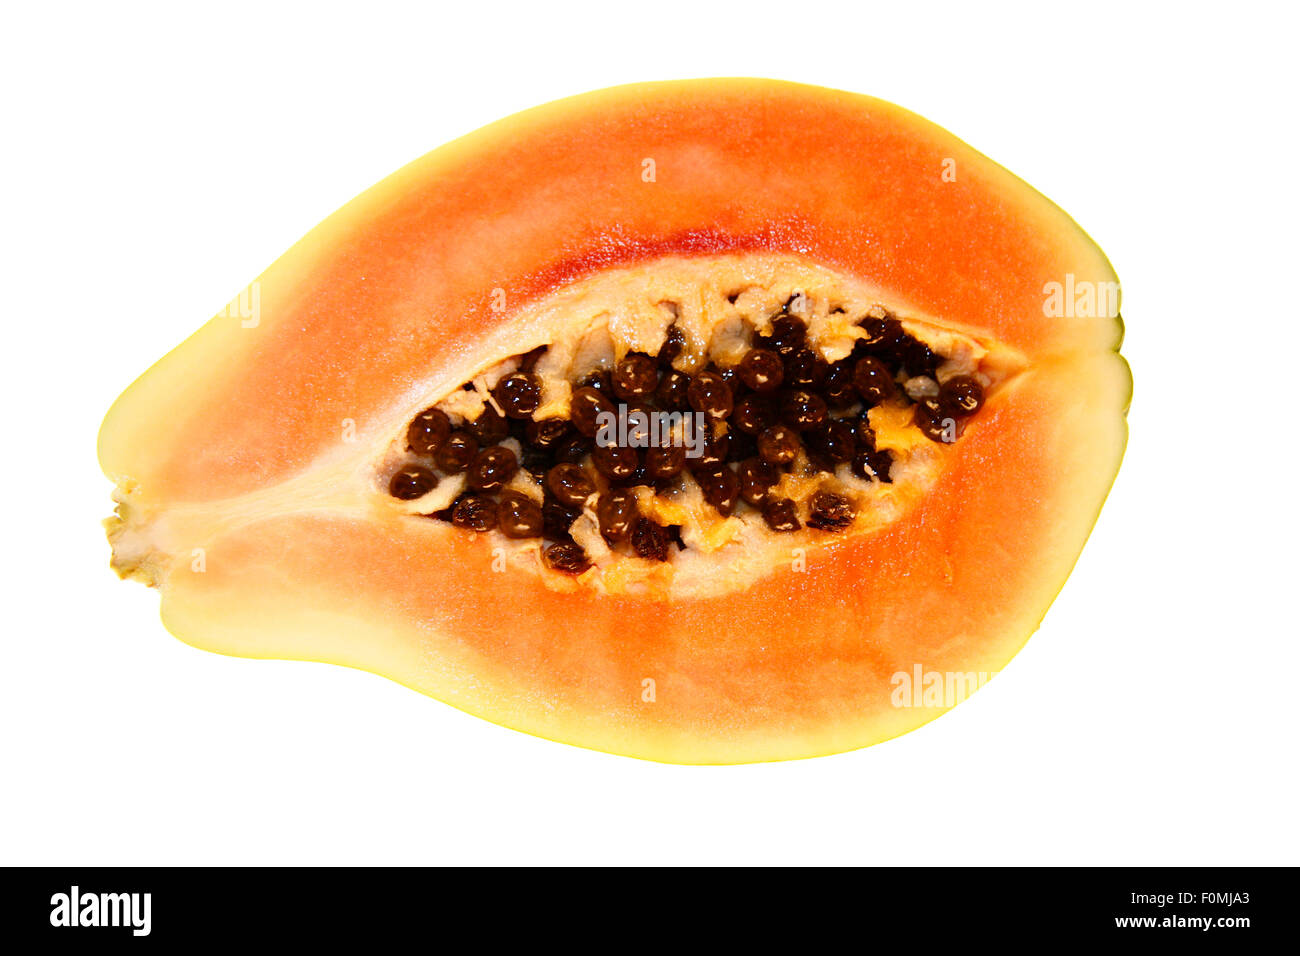 Guave / Guave - Symbolbild Nahrungsmittel. Stockfoto